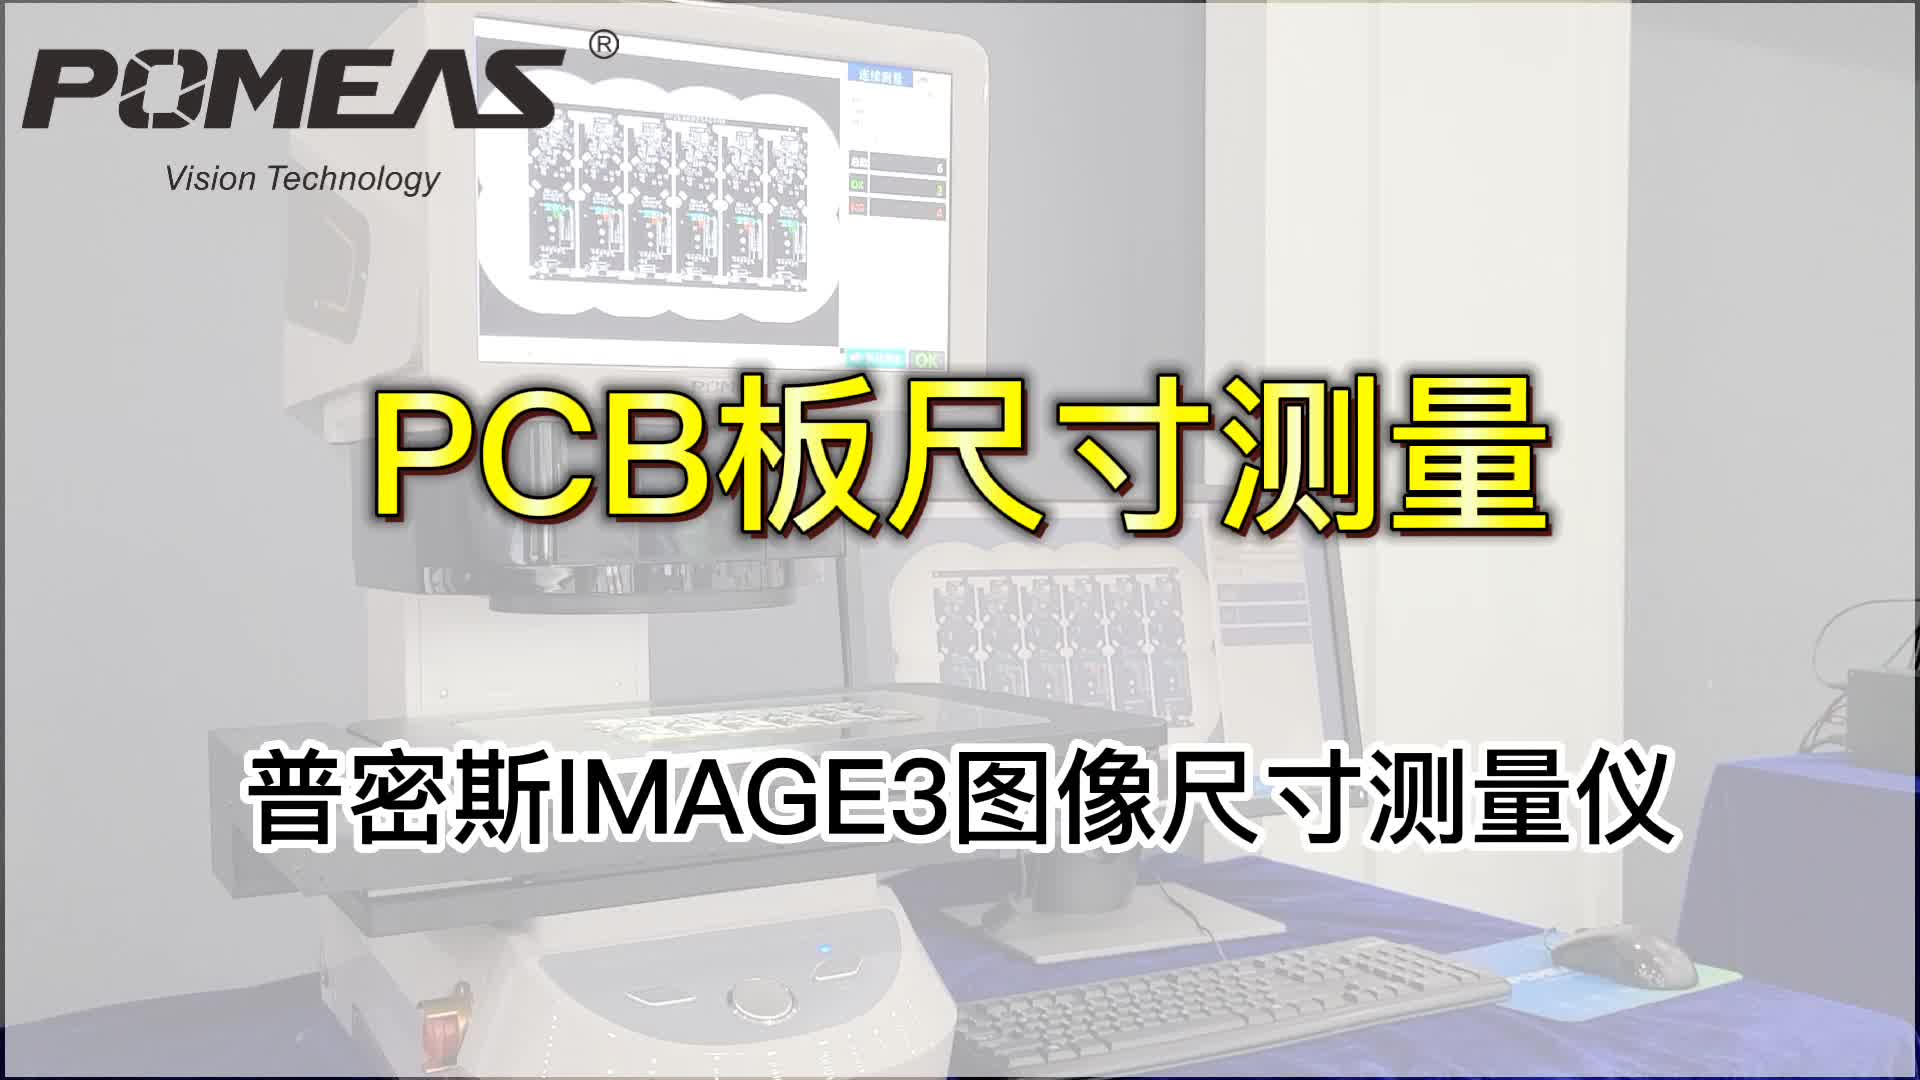 IMAGE3图像测量仪应用|PCB板尺寸检测#产品方案 #闪测仪#光学仪器# 